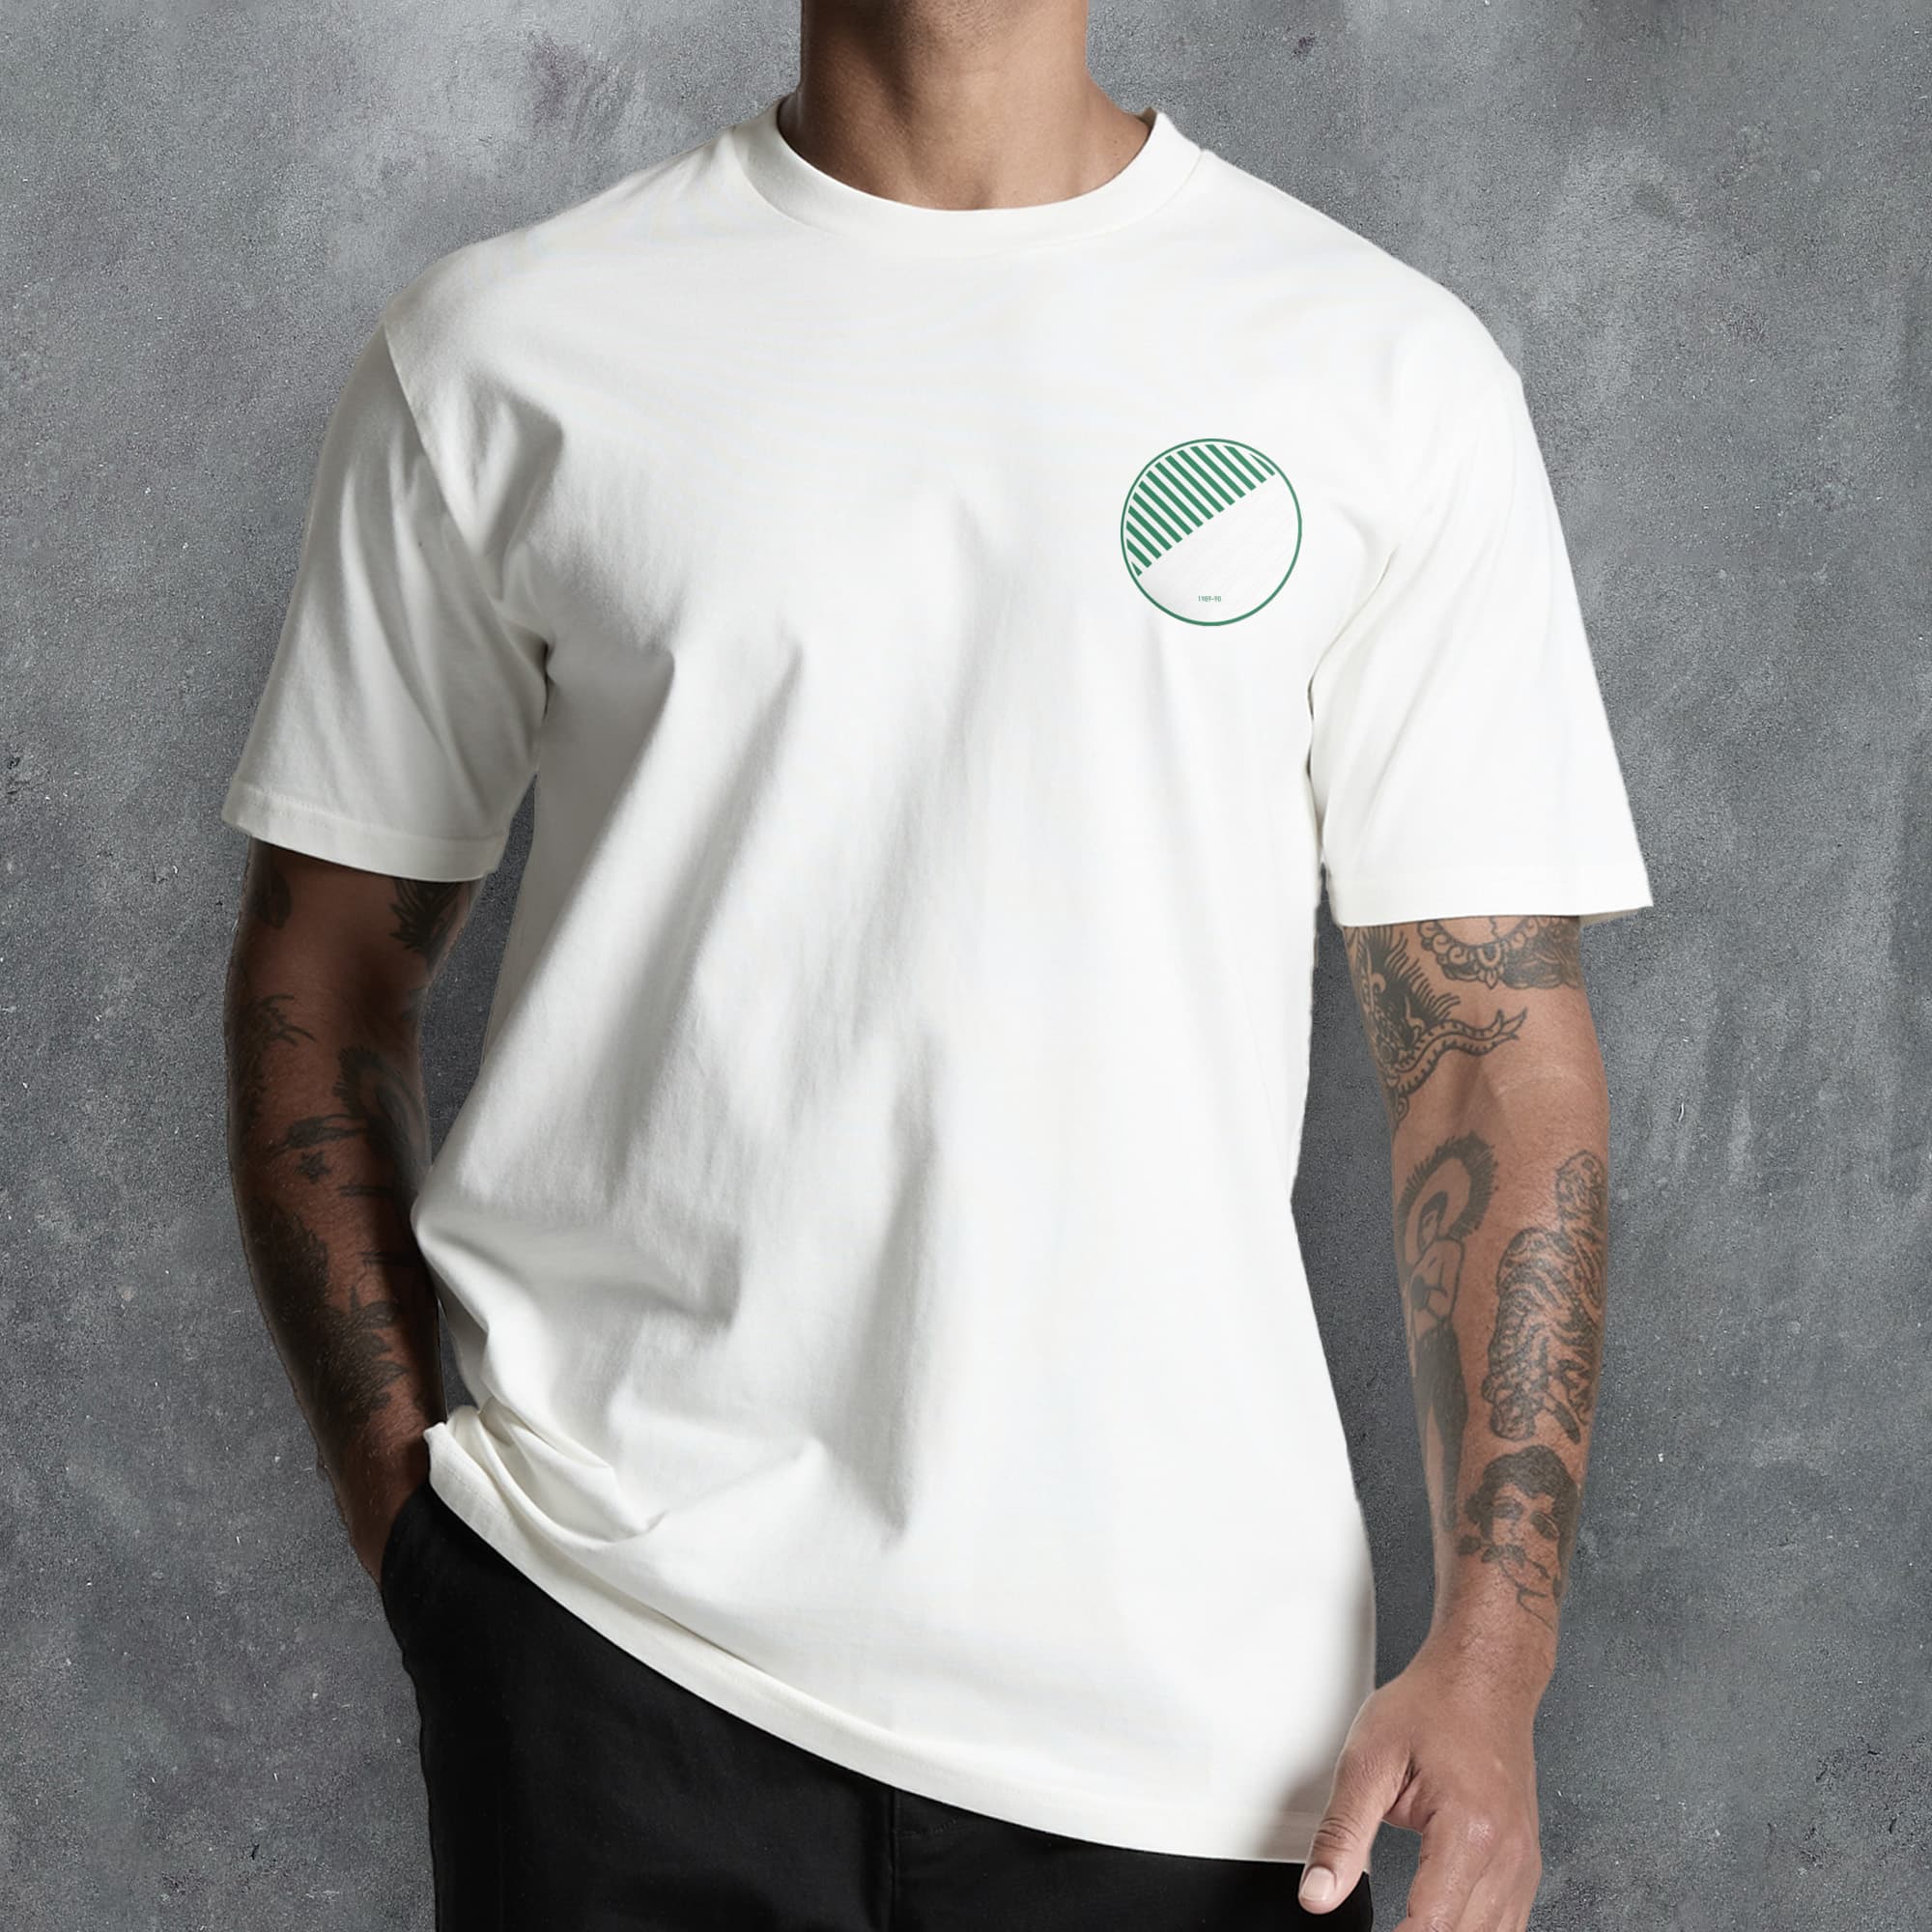 a man wearing a white t - shirt with a green logo